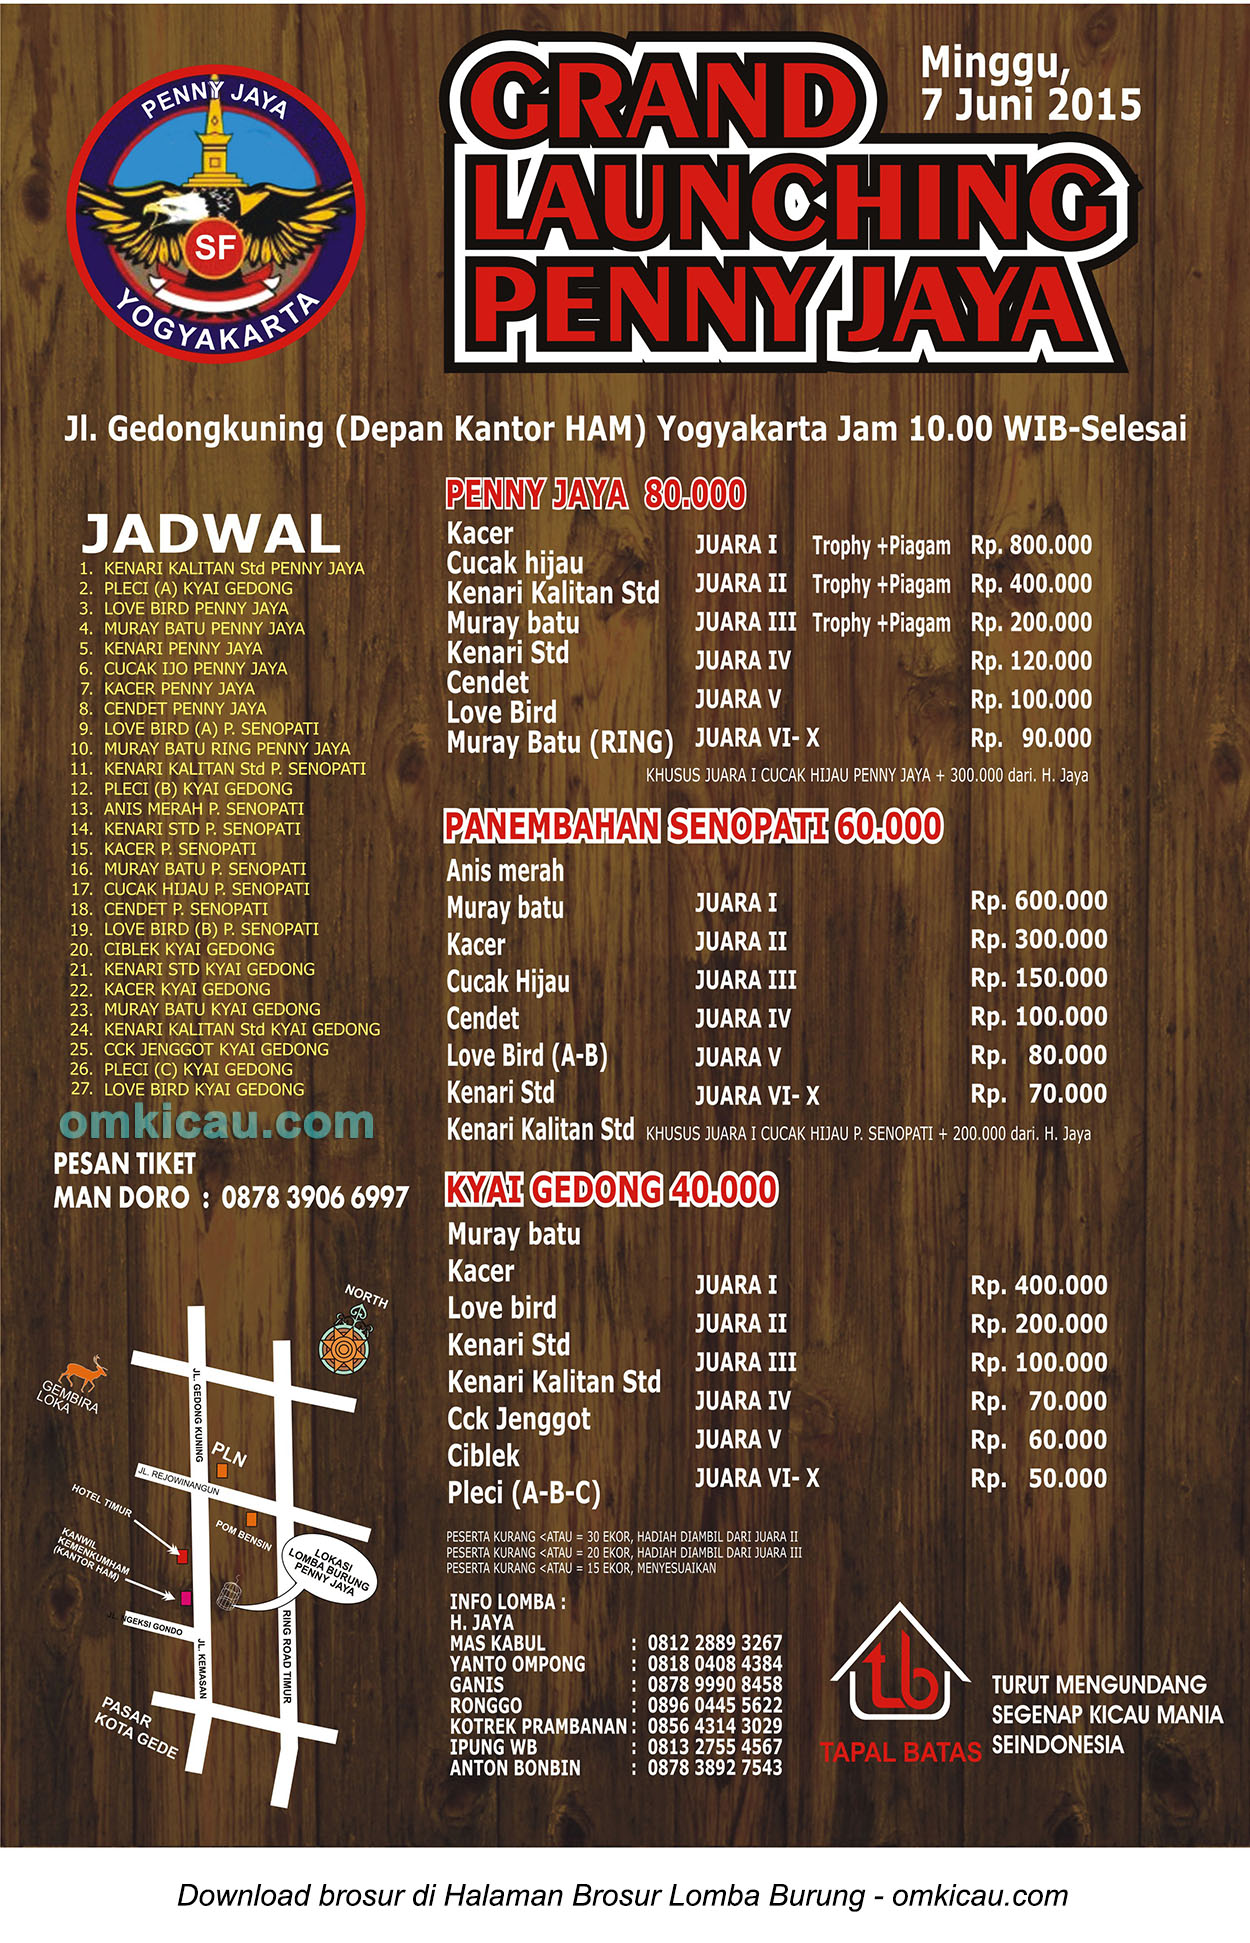 Brosur Lomba Burung Berkicau Grand Launching Penny Jaya, Jogja, 7 Juni 2015